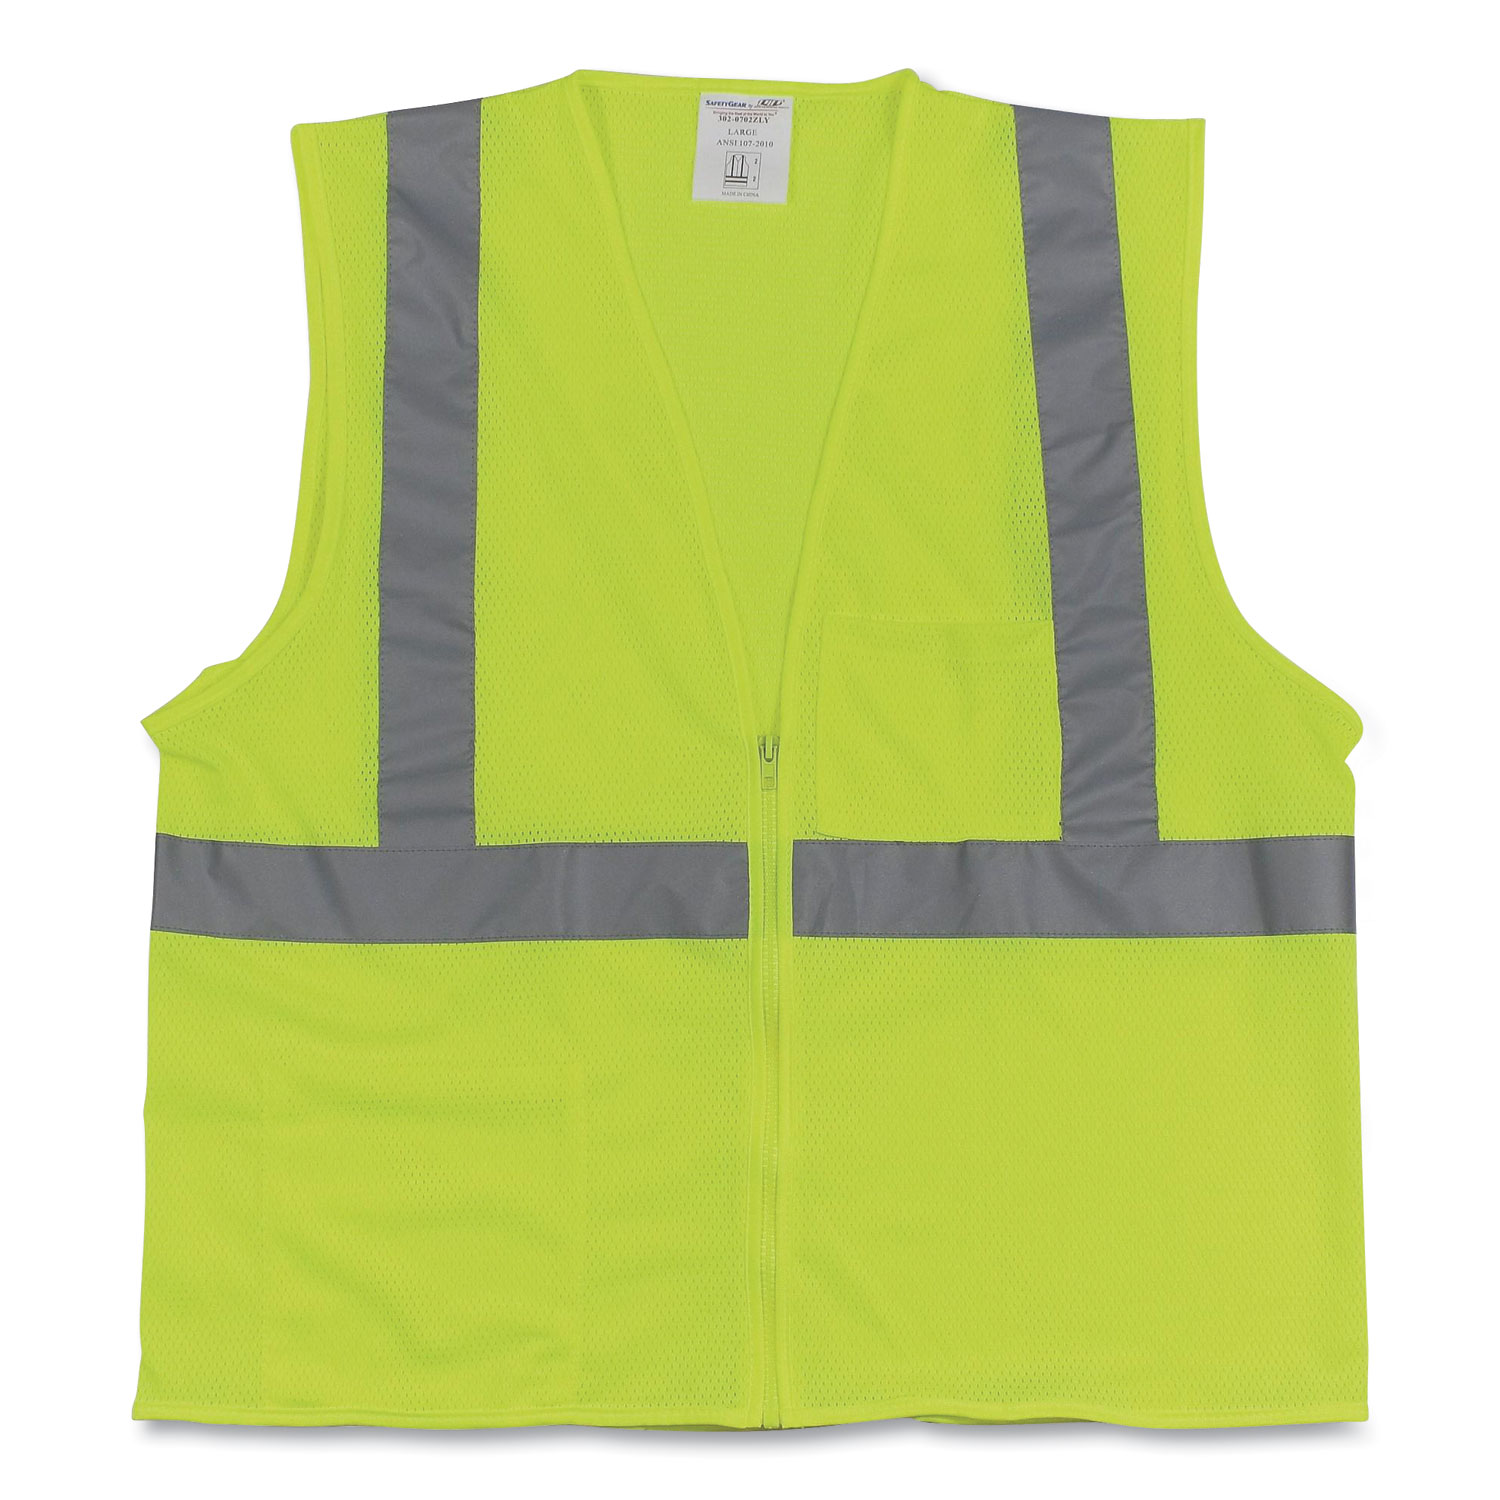 PIP Two-Pocket Zipper Safety Vest, Hi-Viz Lime Yellow, X-Large